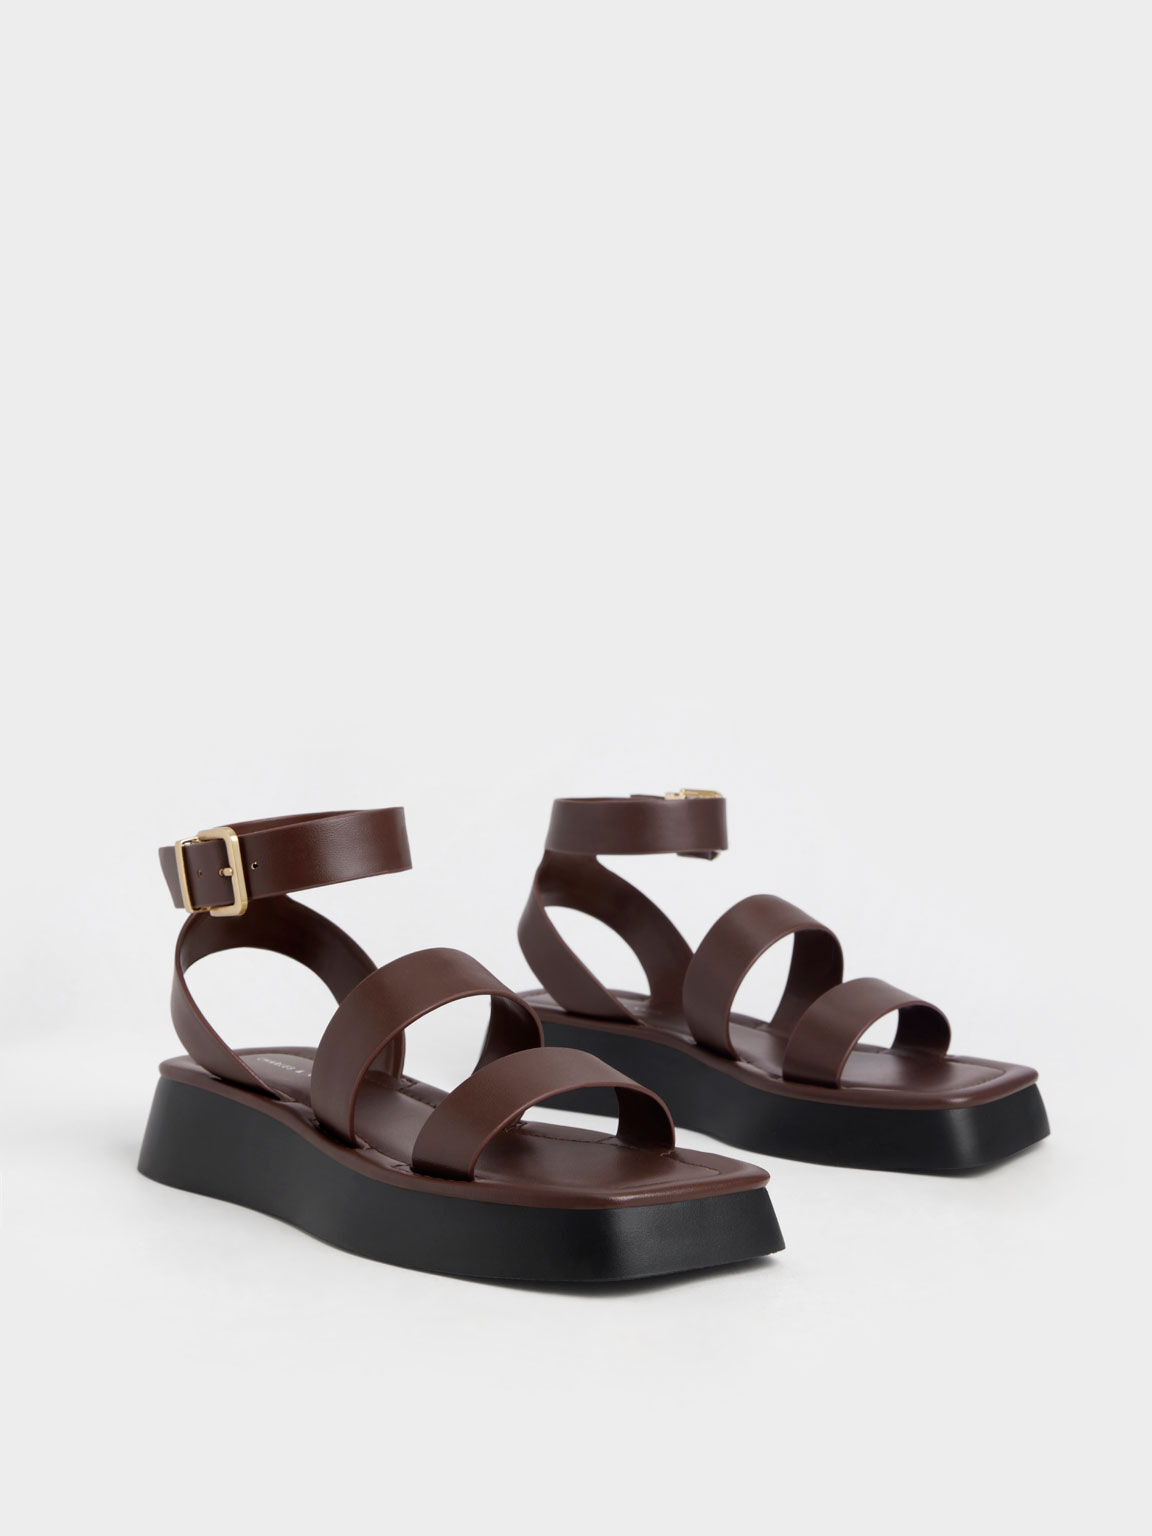 Square Toe Ankle-Strap Sandals, Brown, hi-res